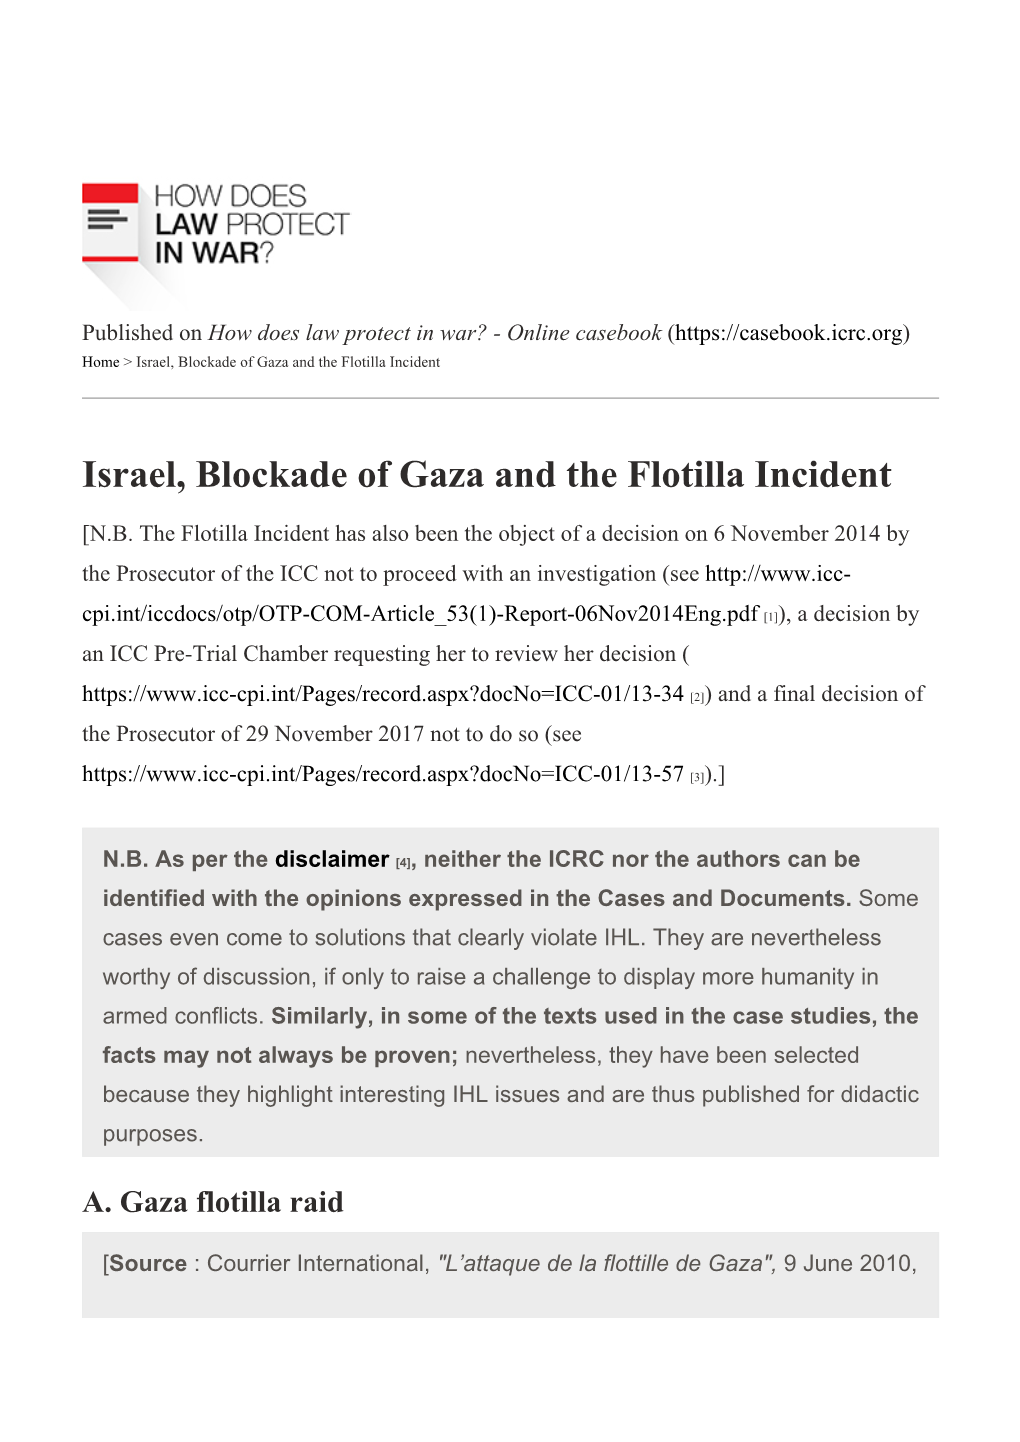 Israel, Blockade of Gaza and the Flotilla Incident